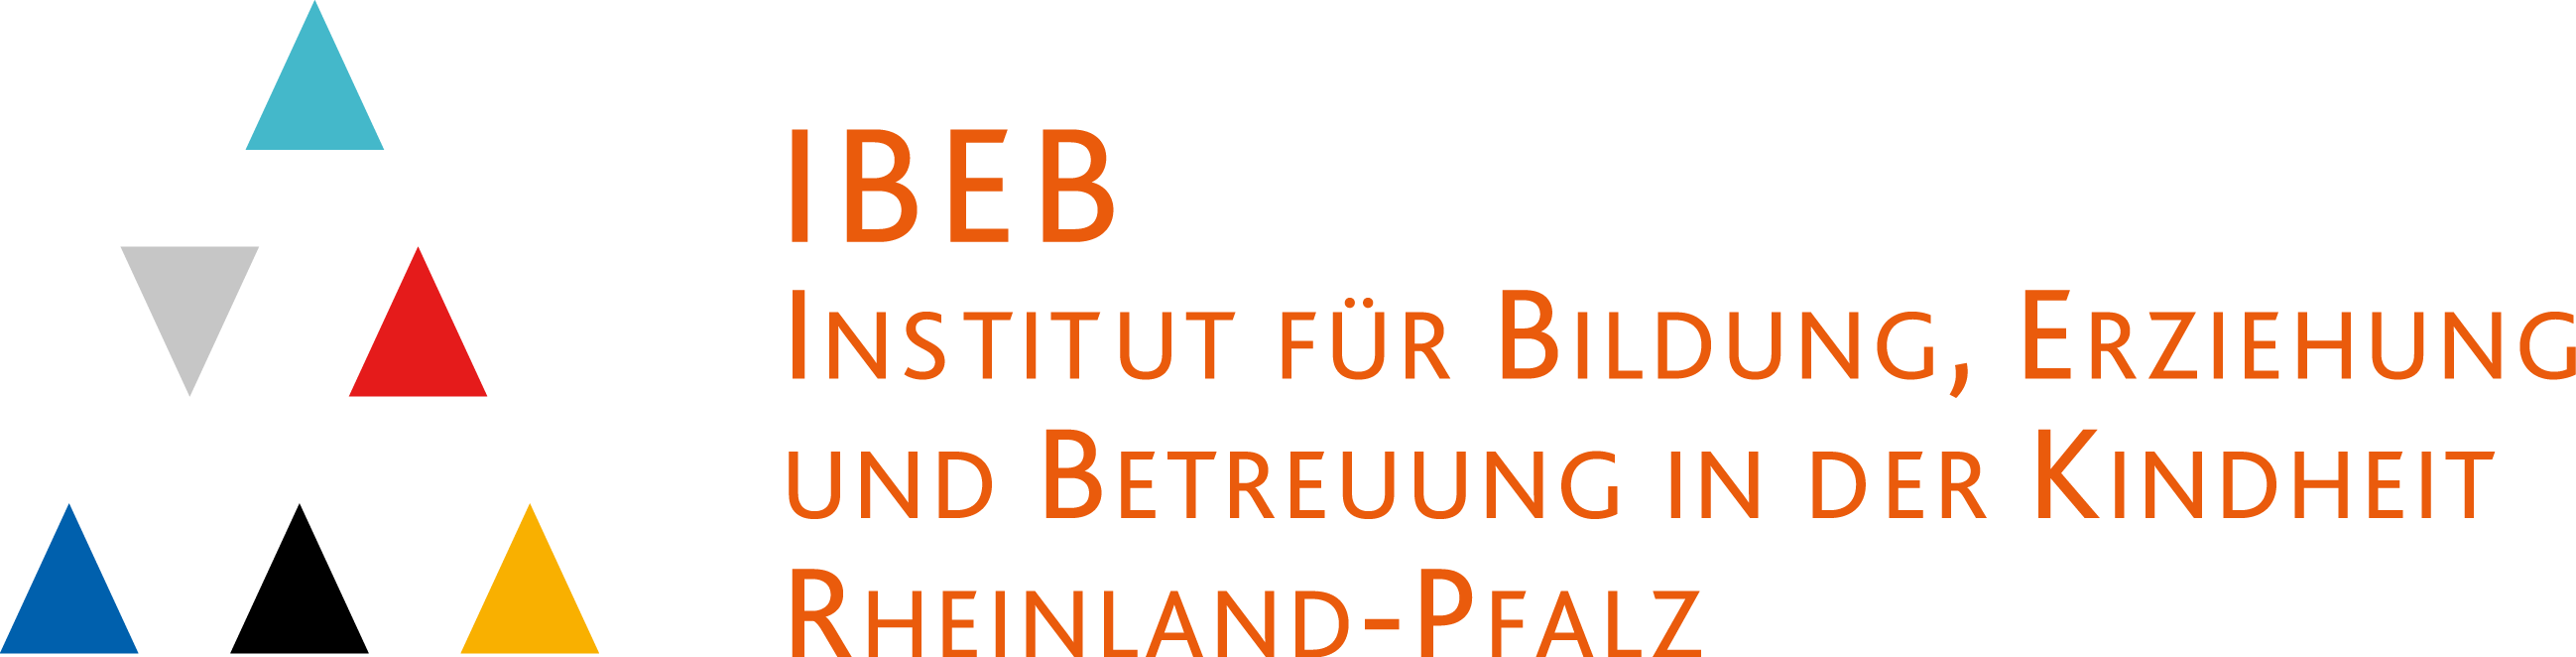 IBEB Logo gross final 4C Pfade png transparent copy